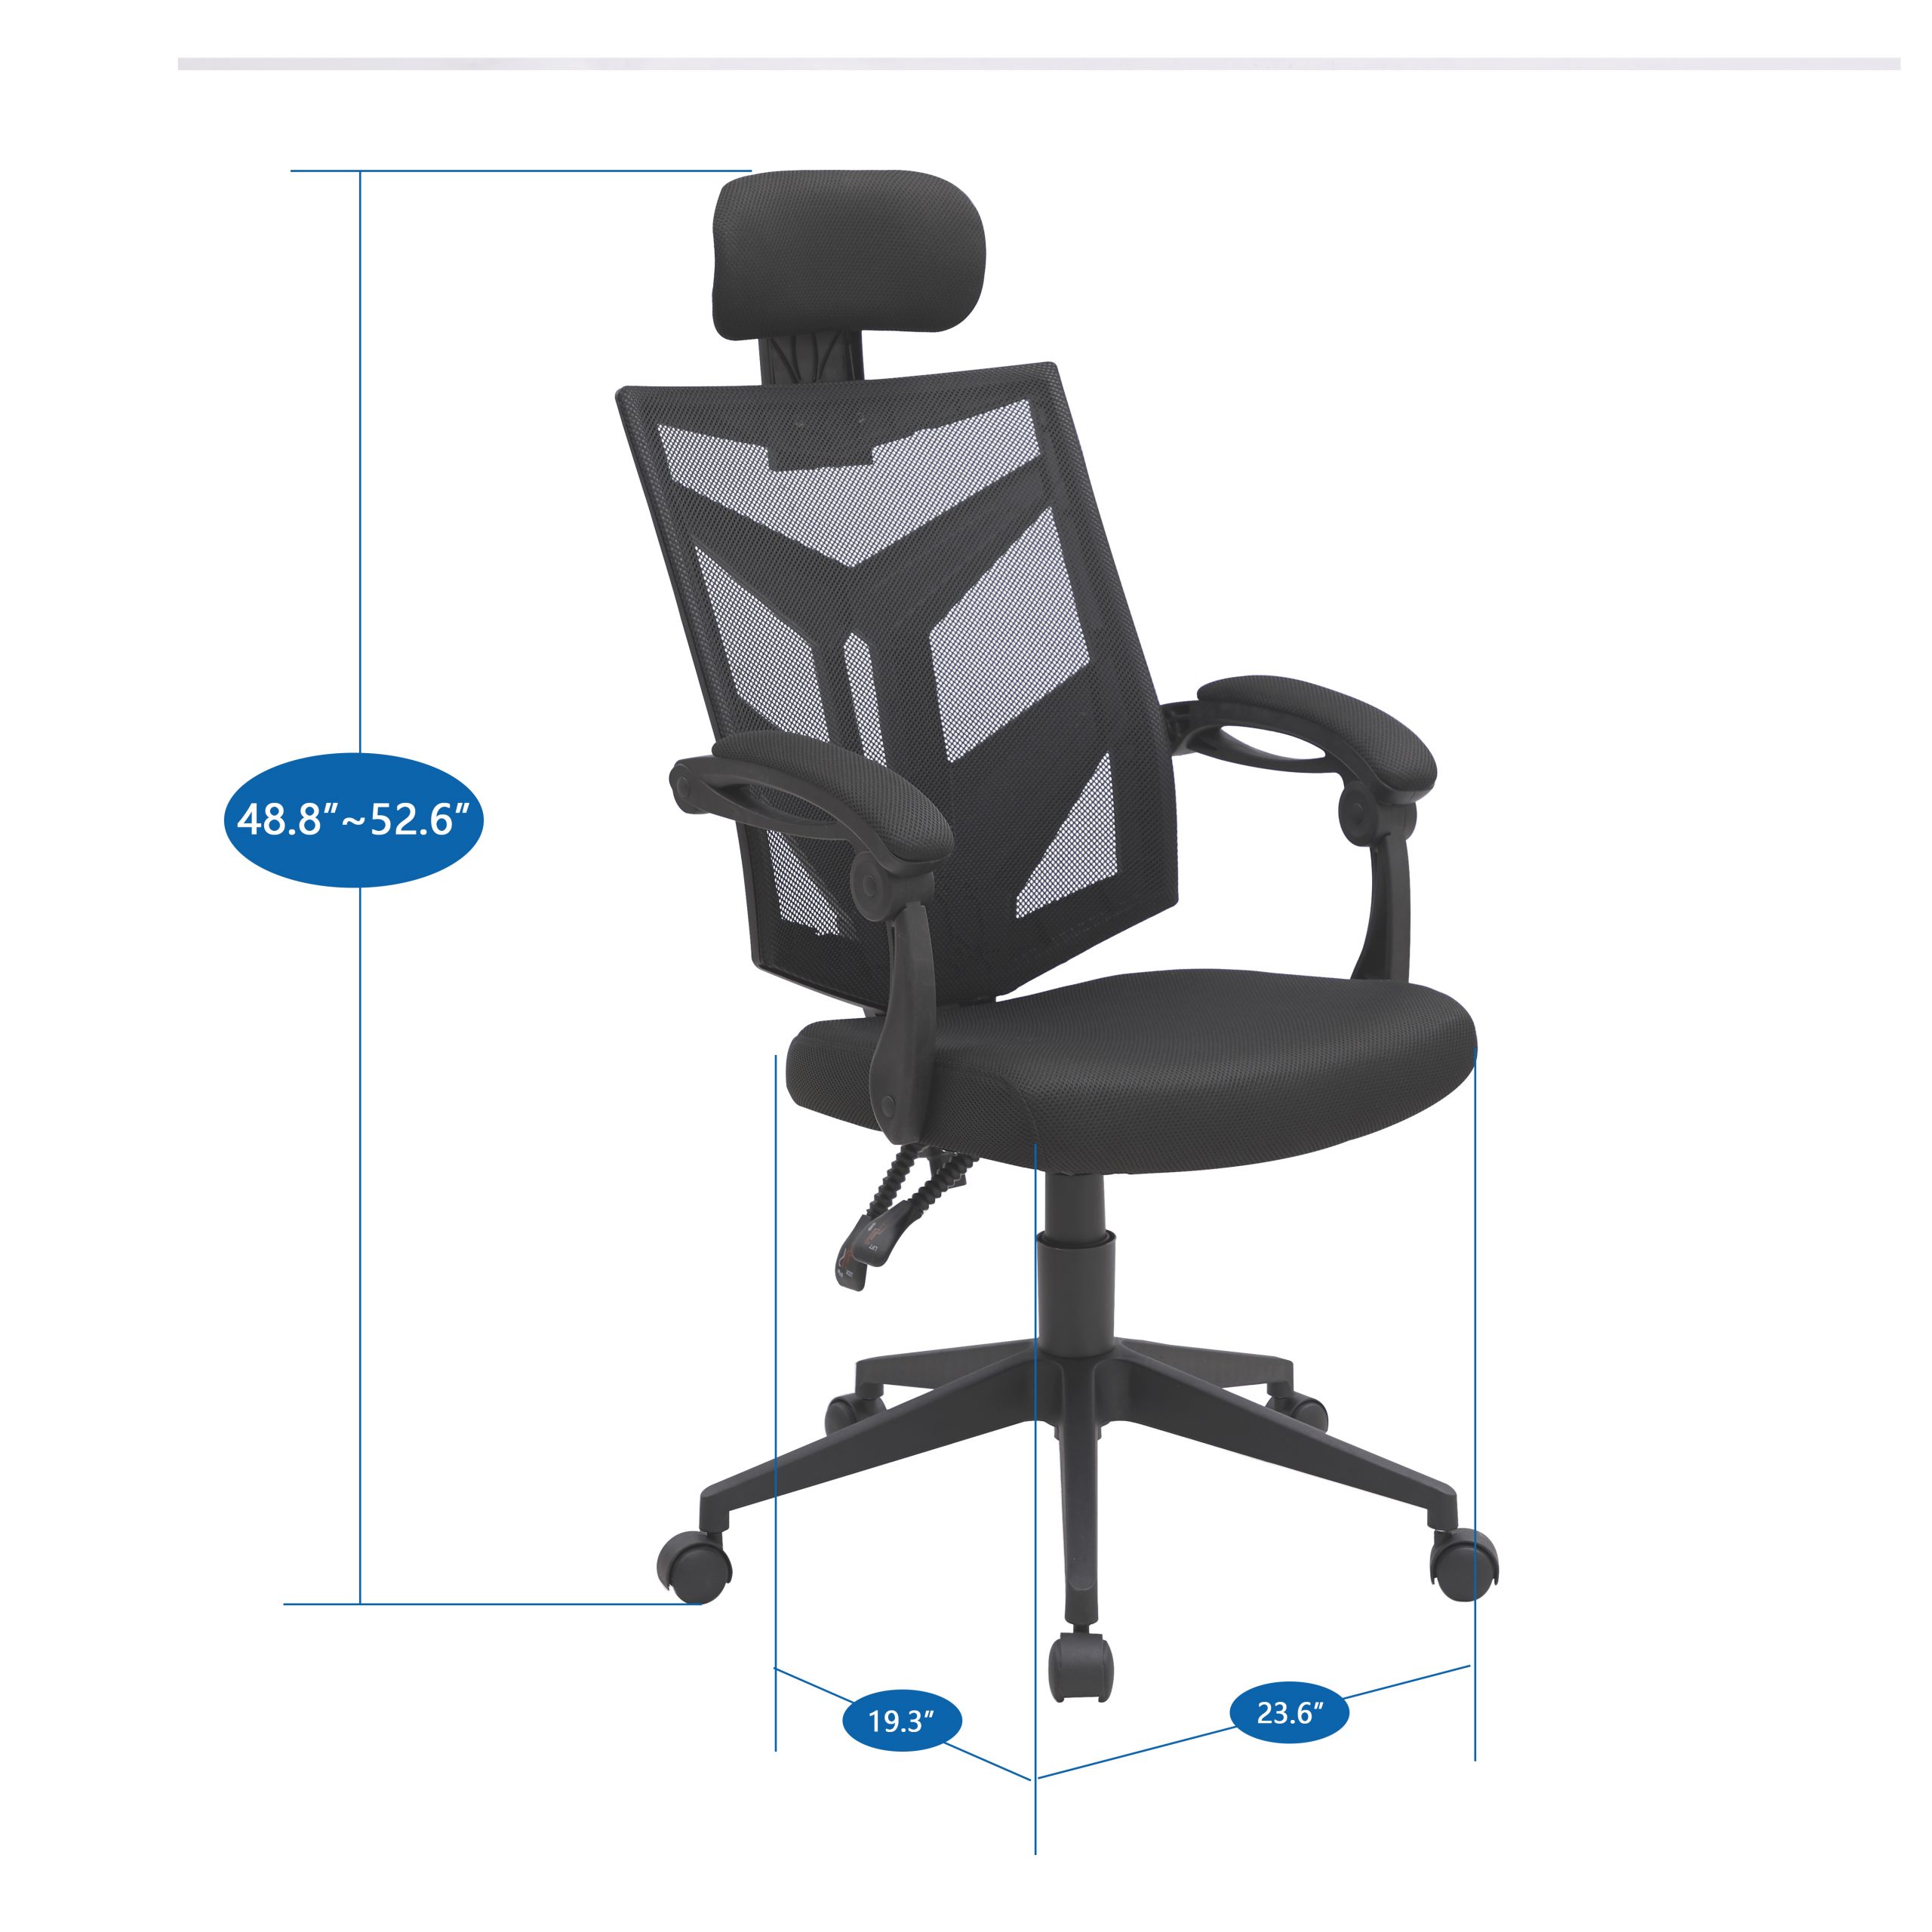 https://naomihome.com/wp-content/uploads/2020/07/Naomi-Home-Juliet-Adjustable-Ergonomic-Mesh-Office-Chair-scaled.jpg